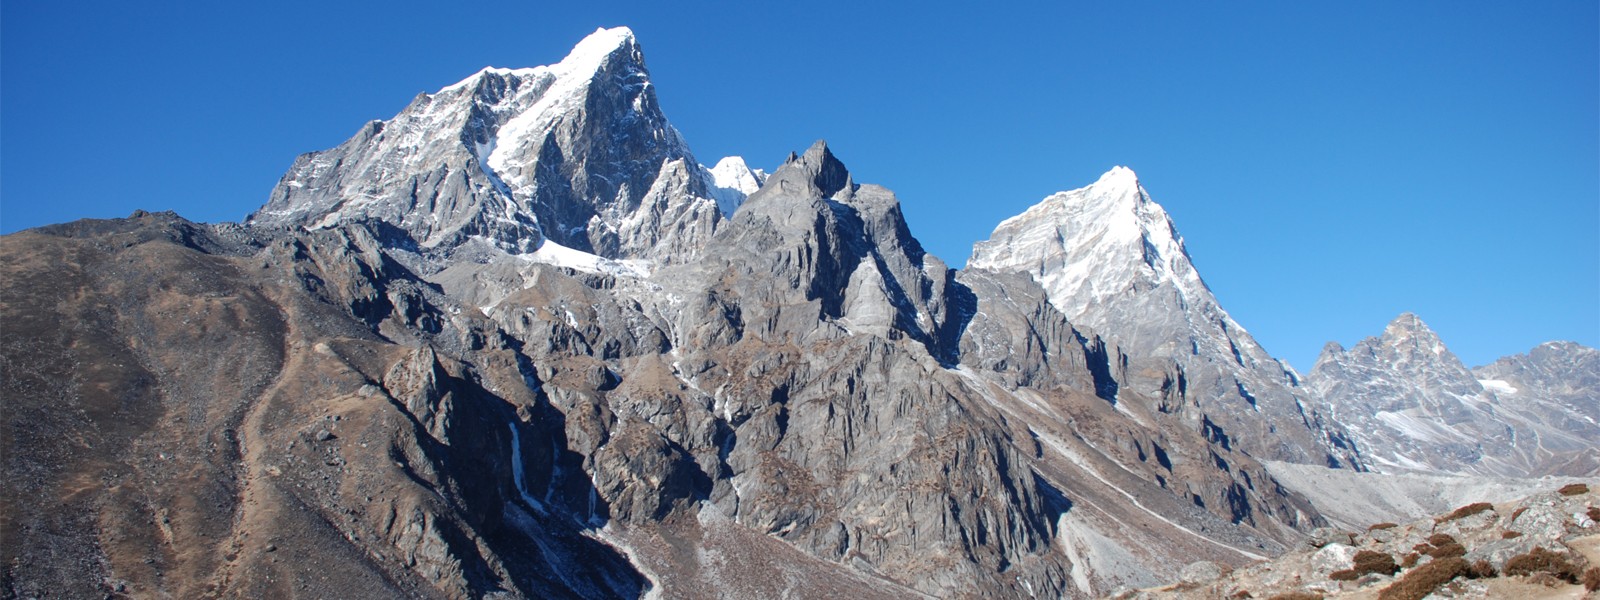 Mt. Taboche Peak and Ama Dablam Expedition